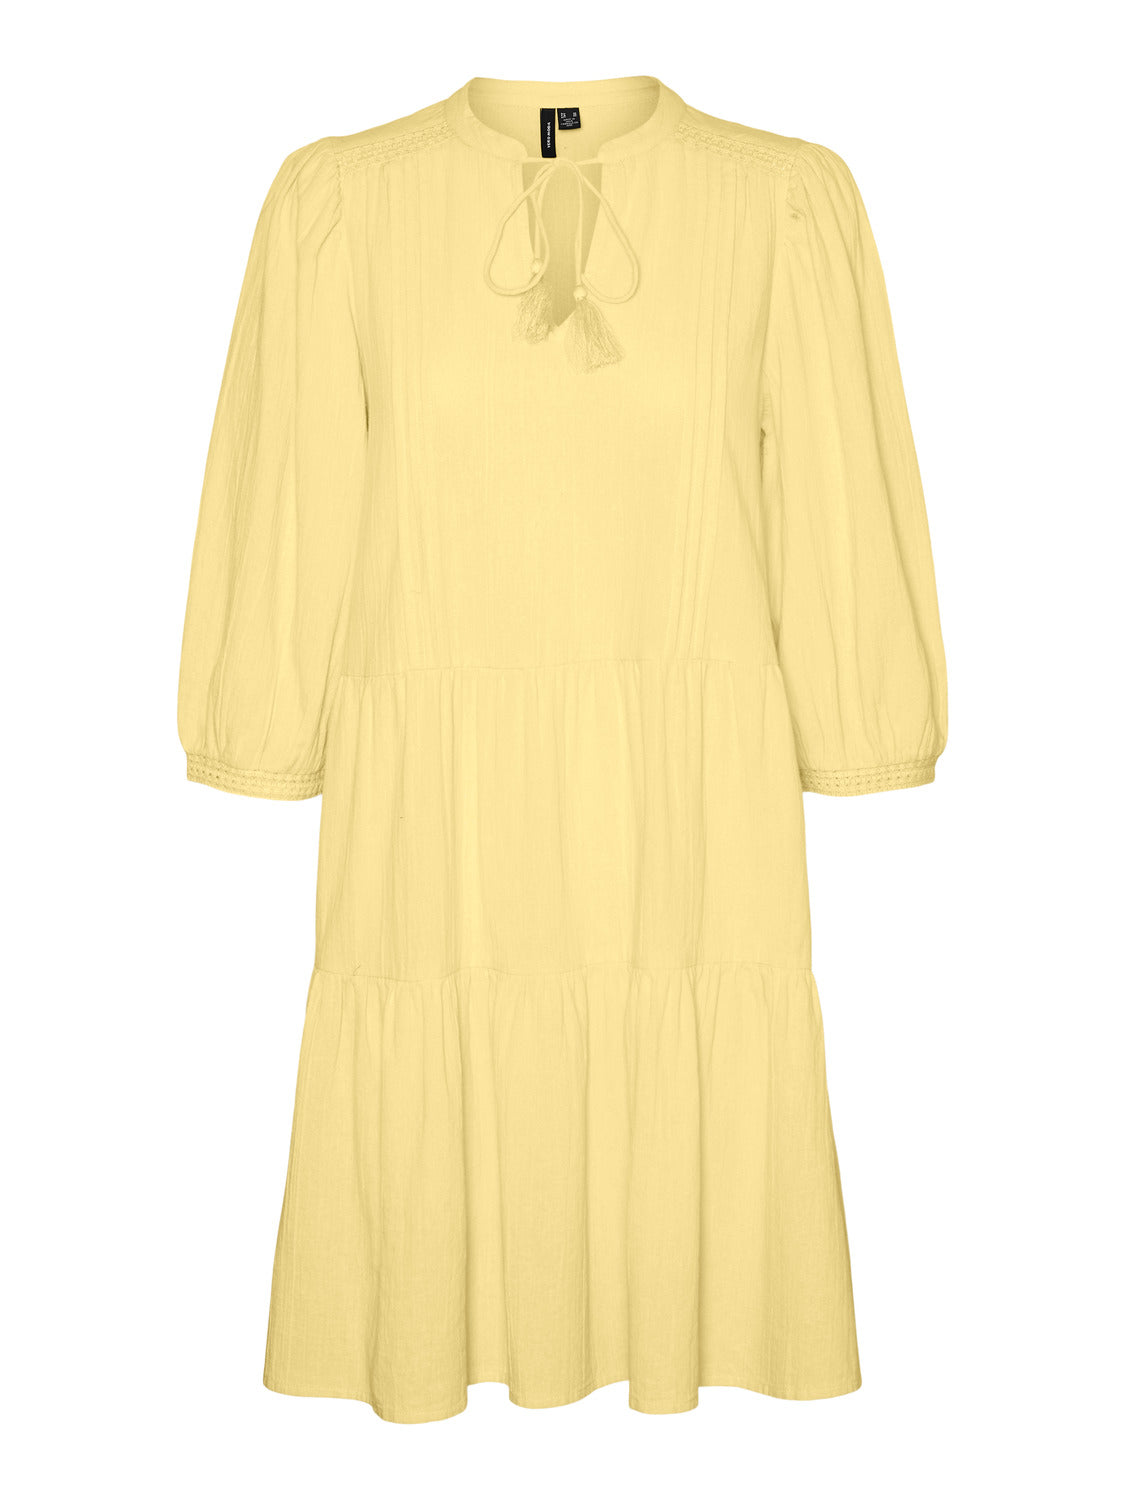 VMPRETTY Dress - Lemon Meringue